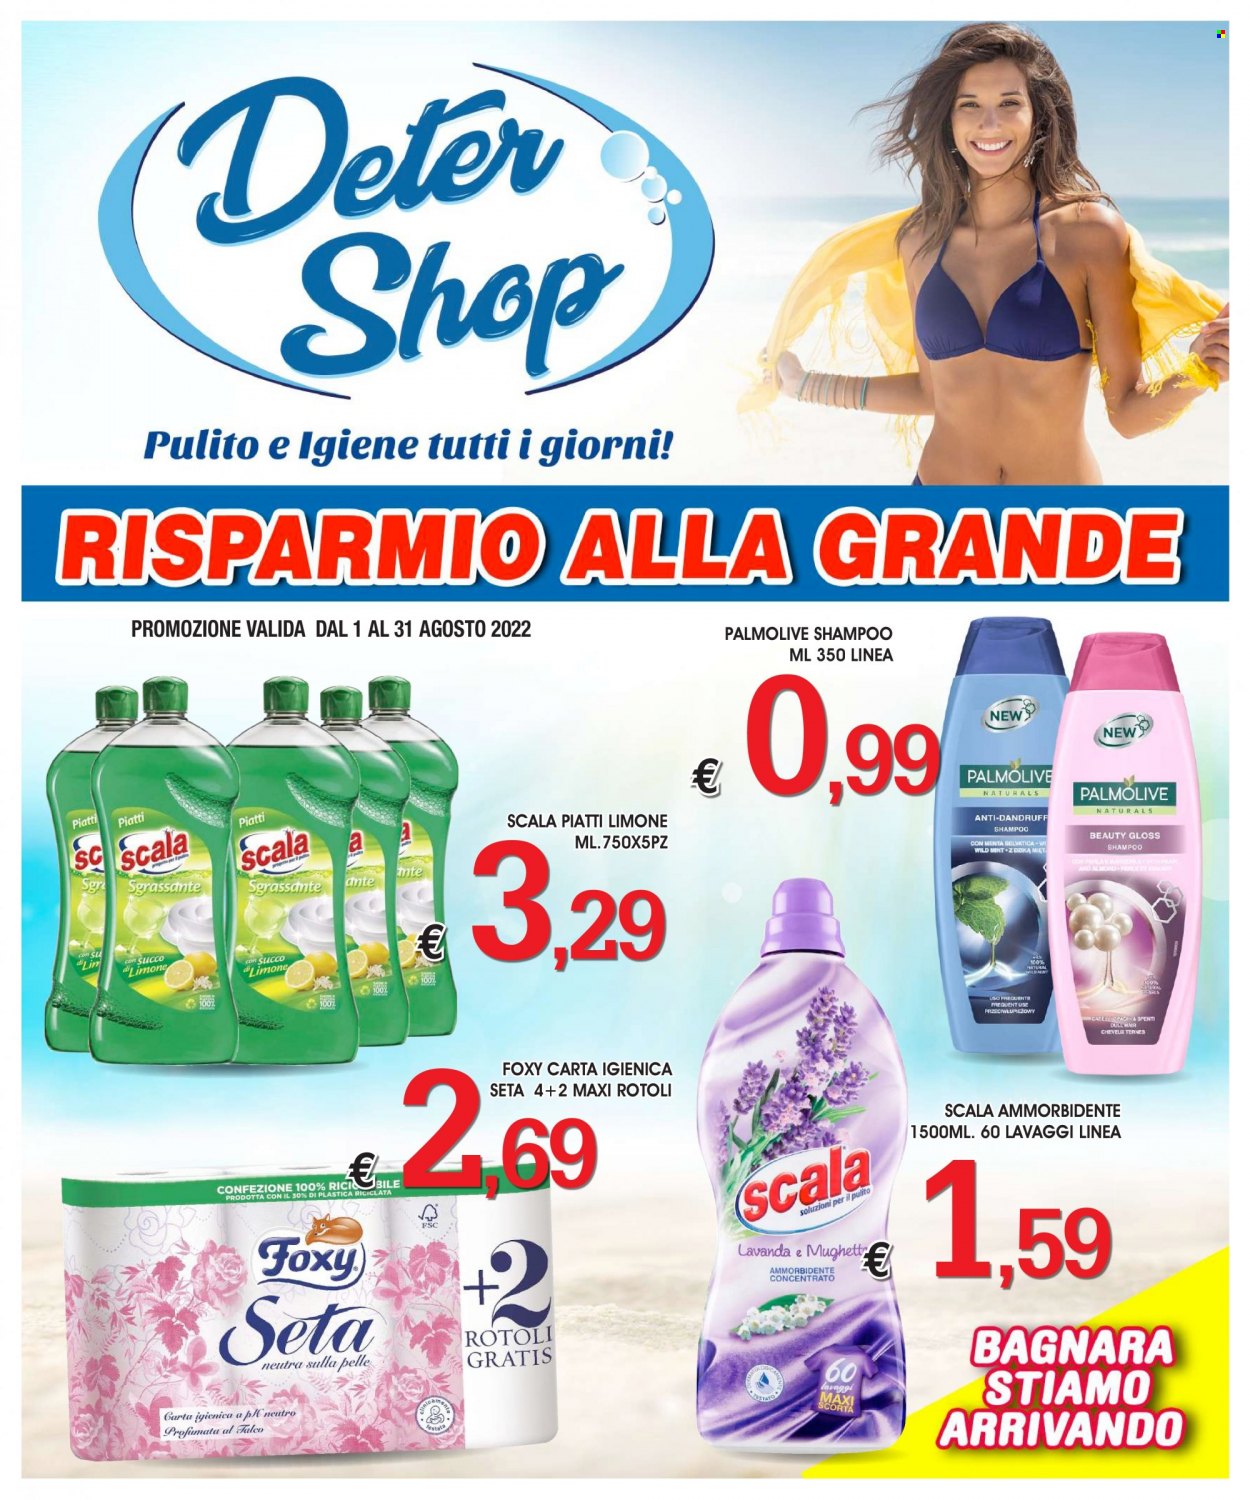 Volantino Deter Shop - 1.8.2022 - 31.8.2022.